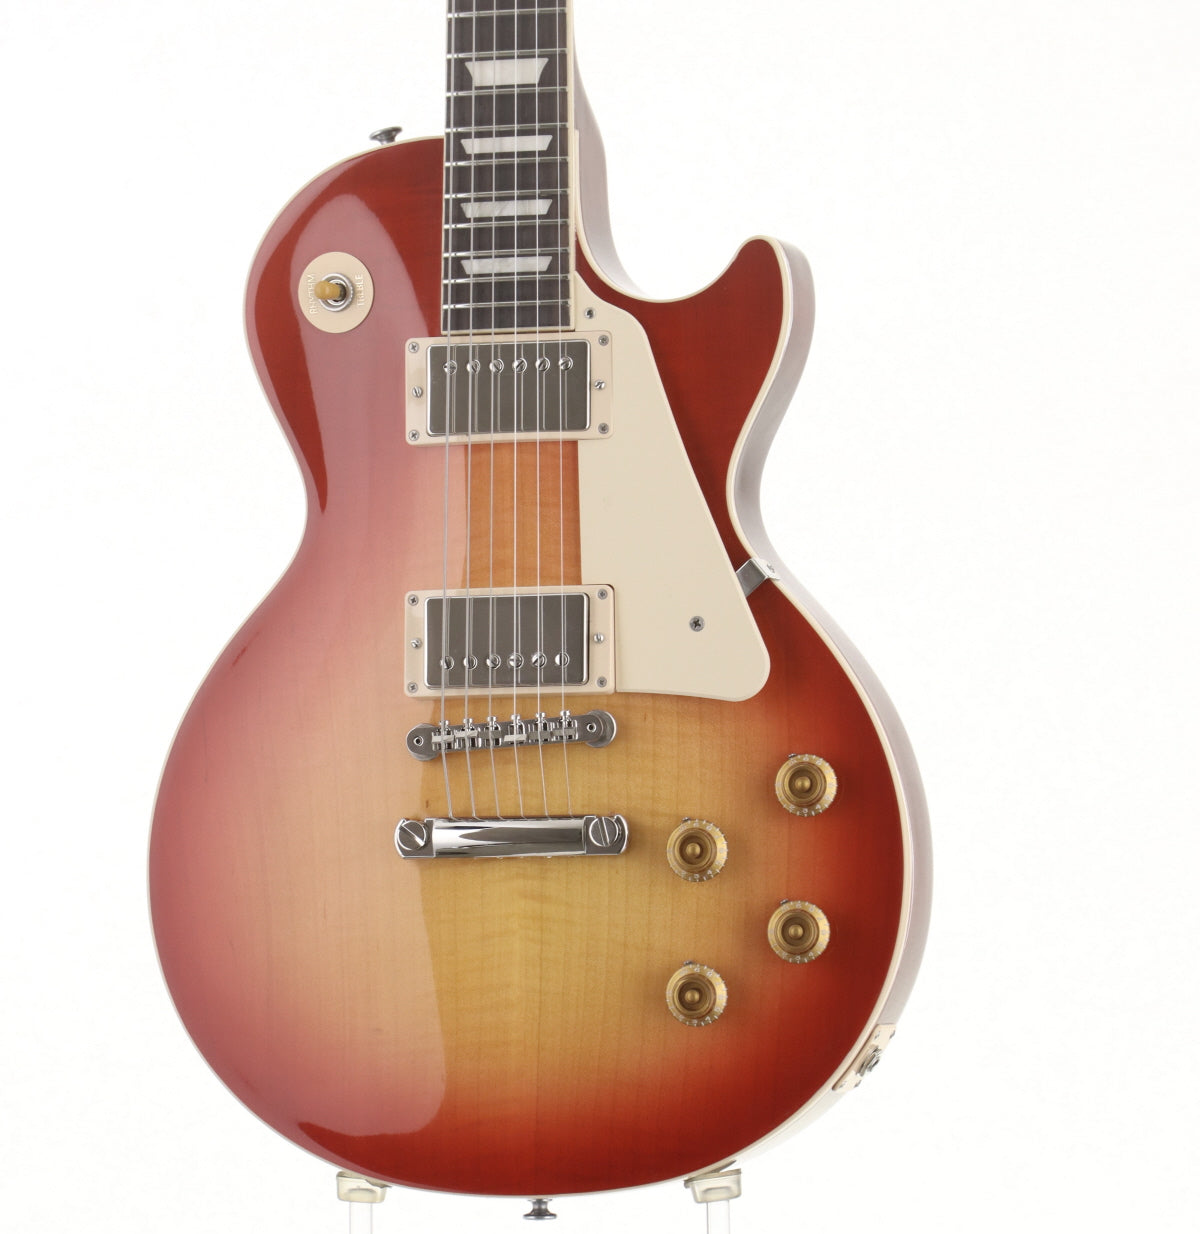 [SN 211120032] USED Gibson USA / Les Paul Standard 50s Heritage Cherry Sunburst [03]